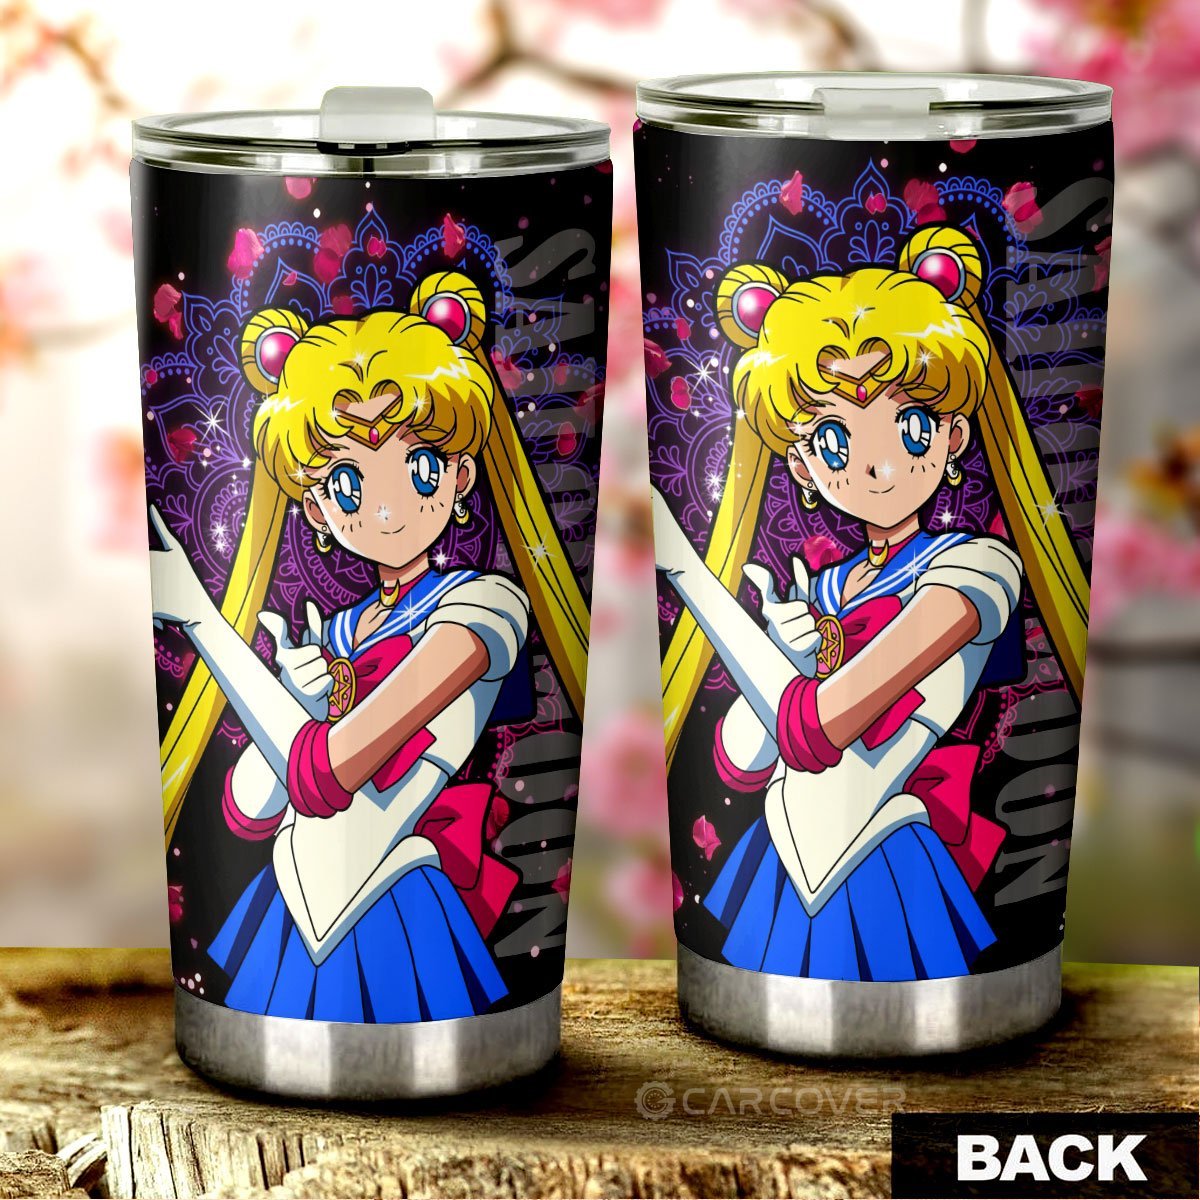 Sailor Moon Tumbler Cup Custom Anime Car Interior Accessories - Gearcarcover - 3